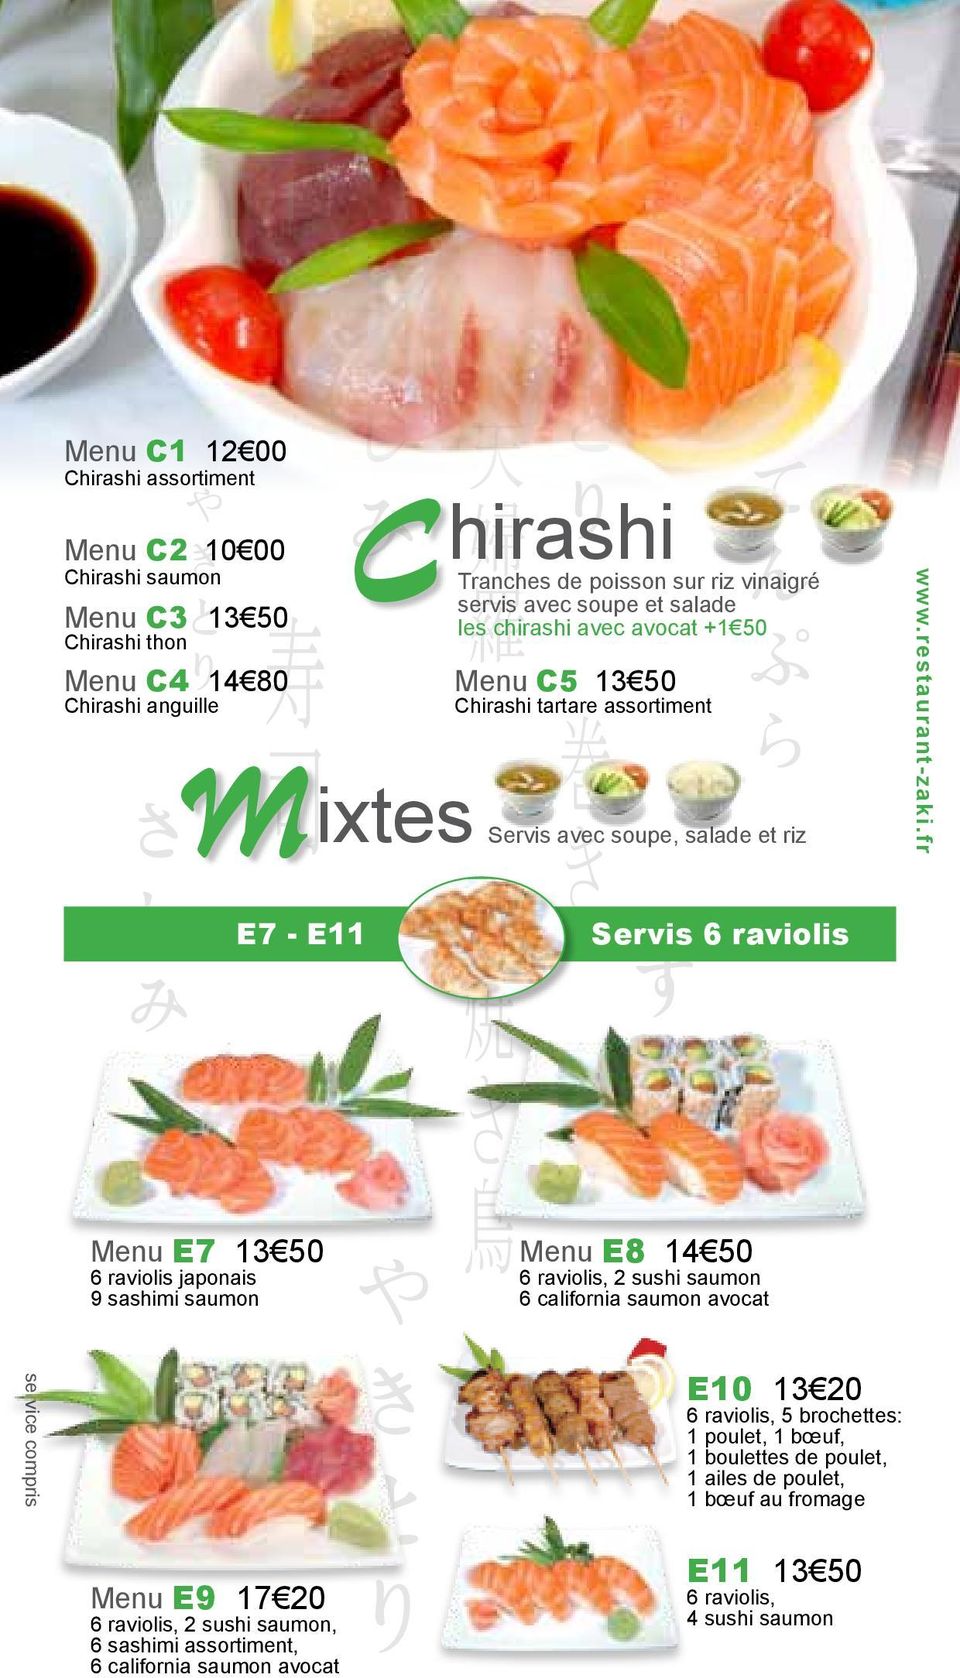 japonais 9 sashimi saumon Menu E9 17 20 6 raviolis, 2 sushi saumon, 6 sashimi assortiment, 6 california saumon avocat Menu E8 14 50 6 raviolis, 2 sushi saumon 6 california saumon